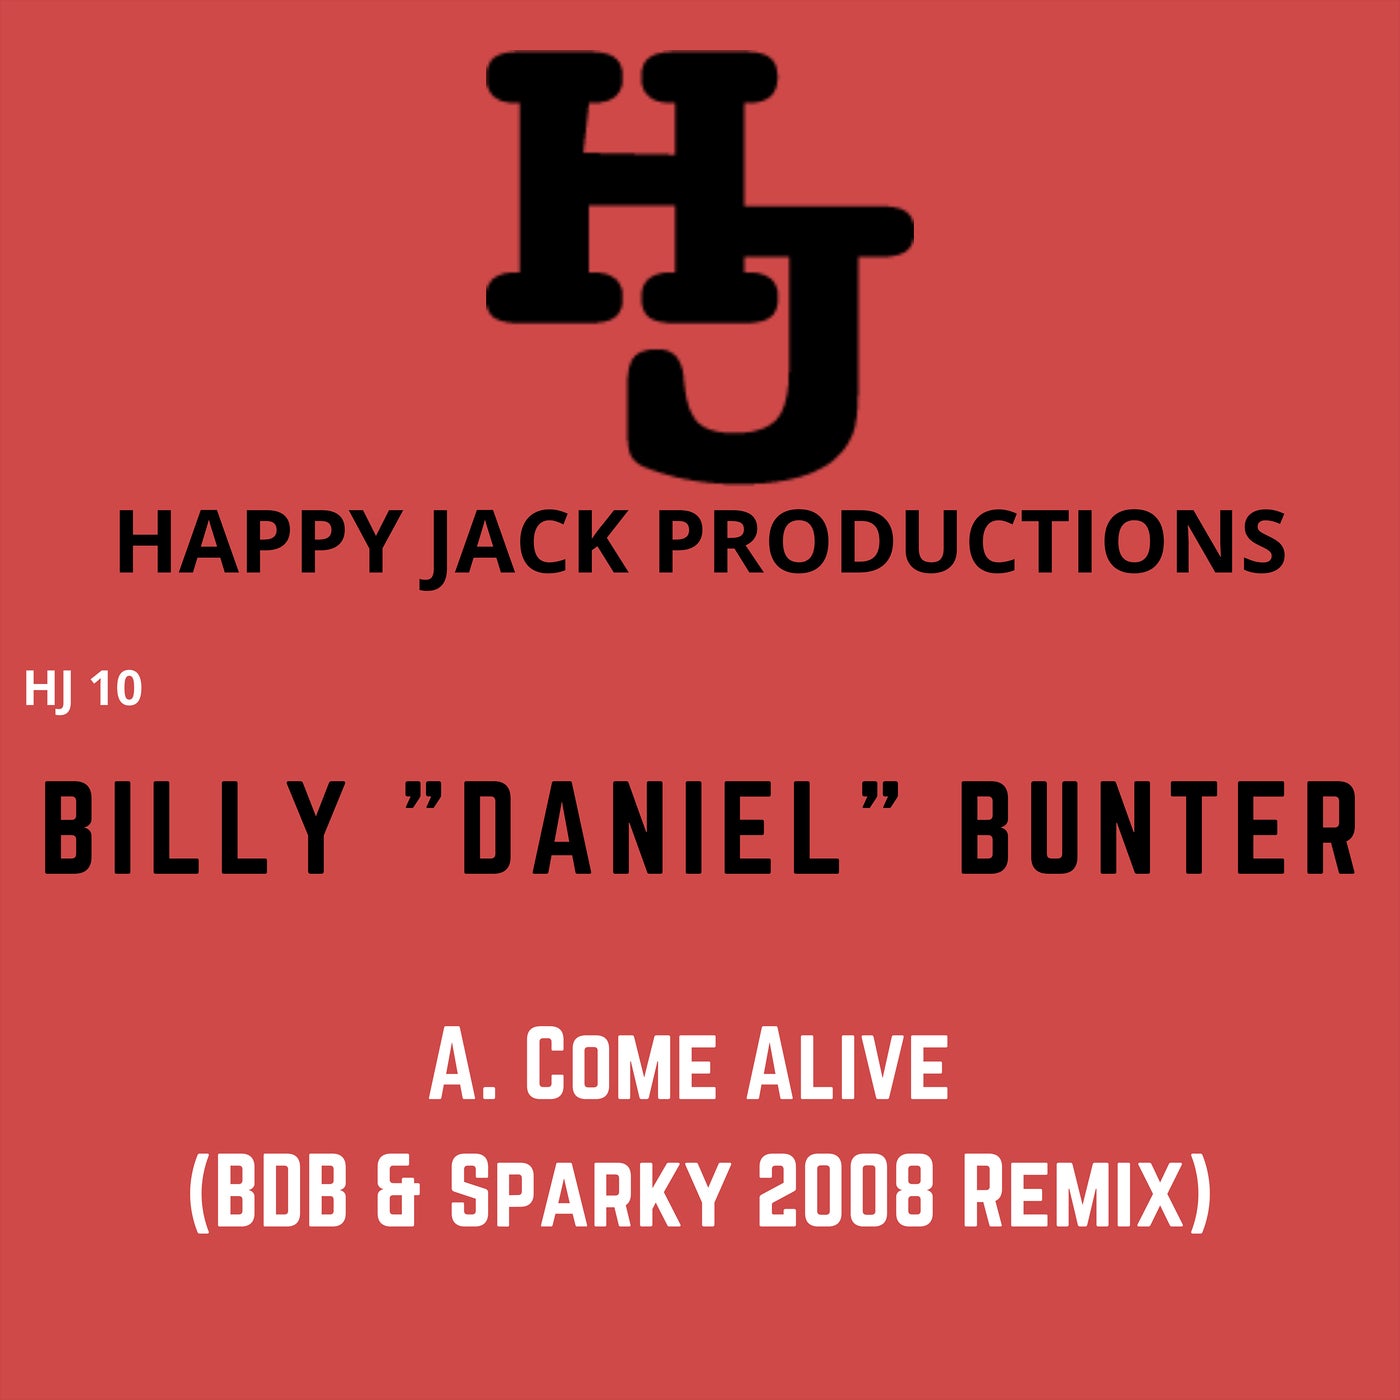 Come Alive (Bdb & Sparky 2008 Remix)